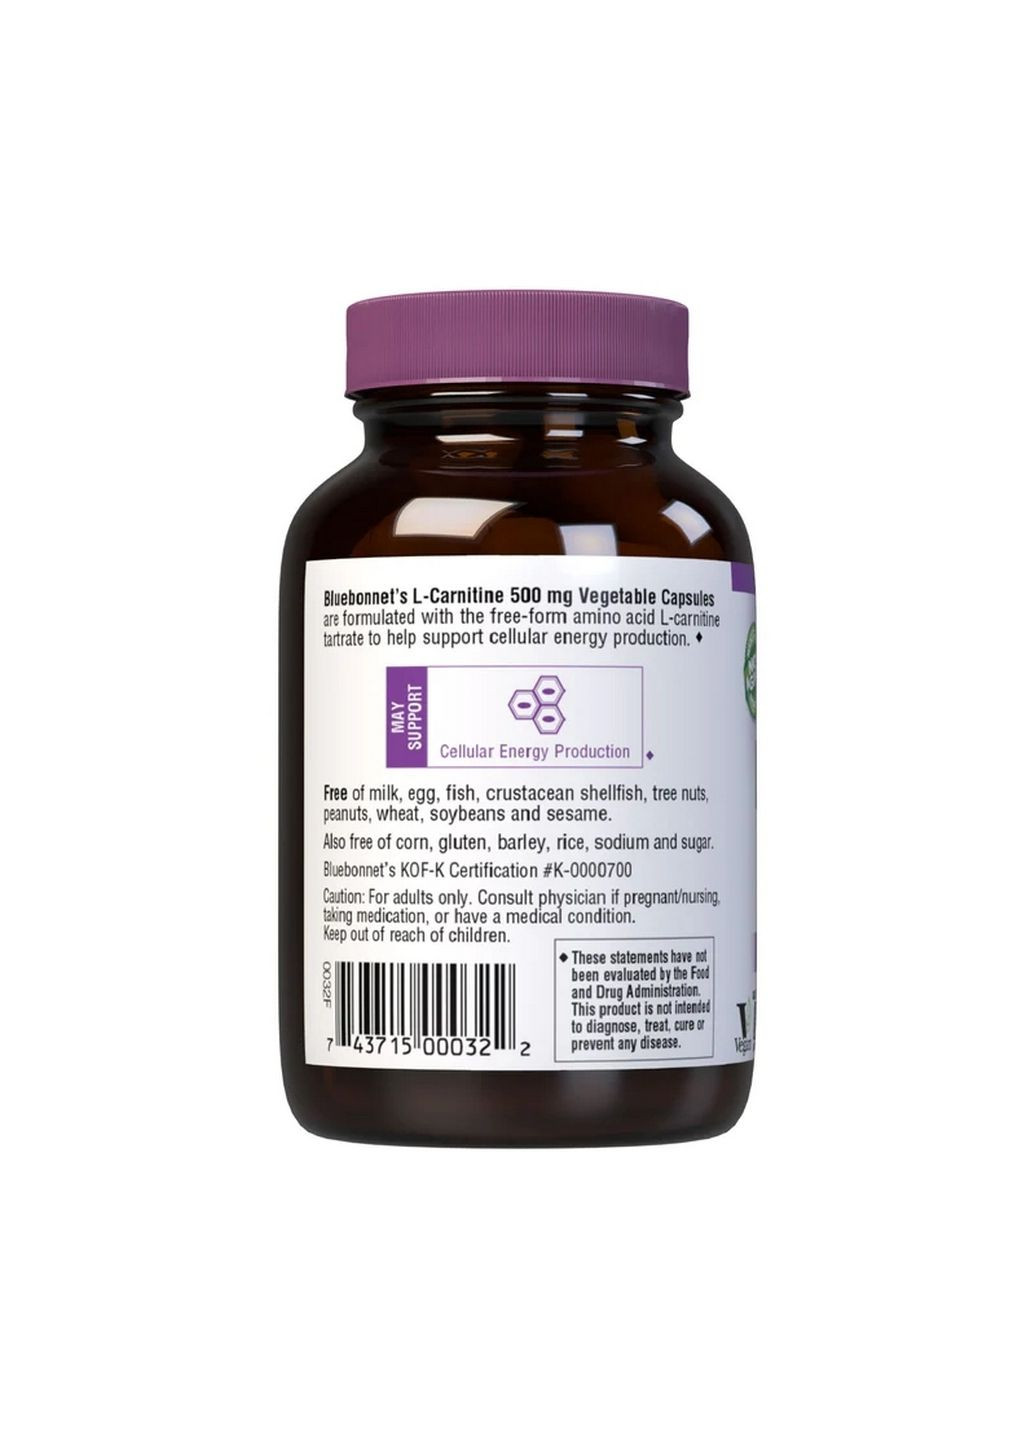 Жироспалювач Bluebonnet L-Carnitine 500 mg, 30 вегакапсул Bluebonnet Nutrition (293421829)